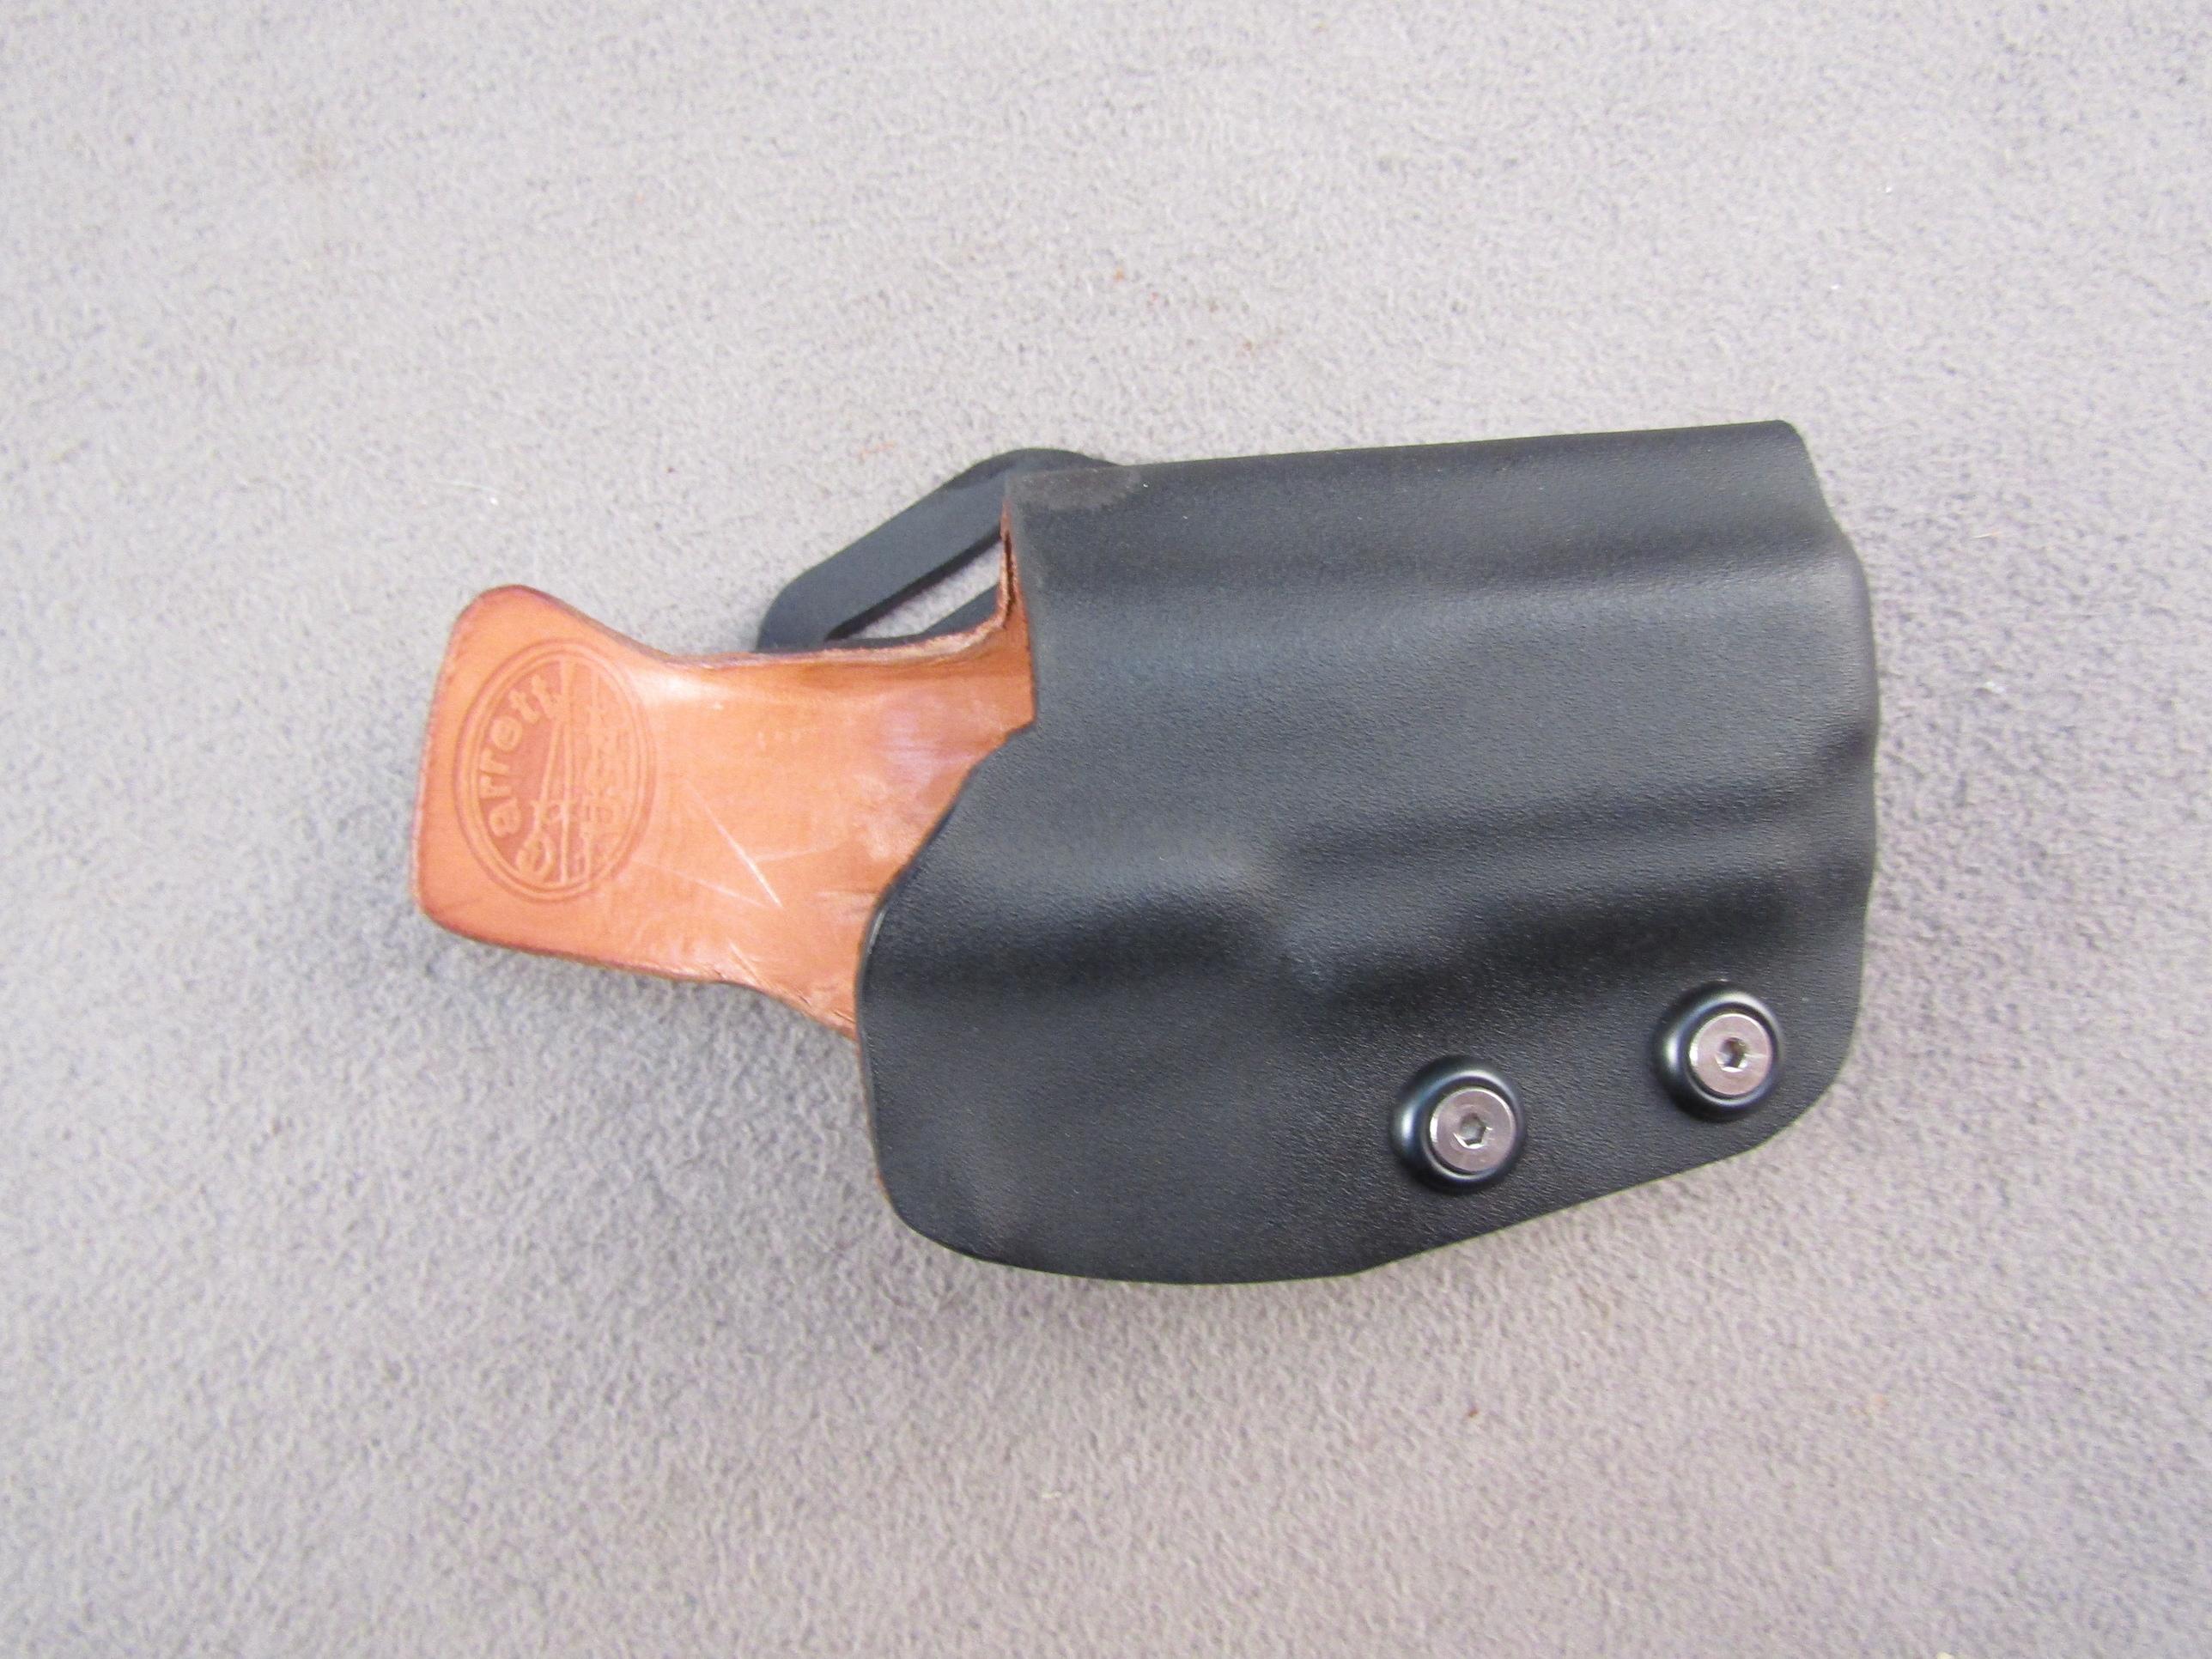 handgun: SPRINGFIELD ARMORY Model 1911 EMP, Semi-Auto Pistol, 9mm, 10 shot, 3" barrel, S#EMP55940